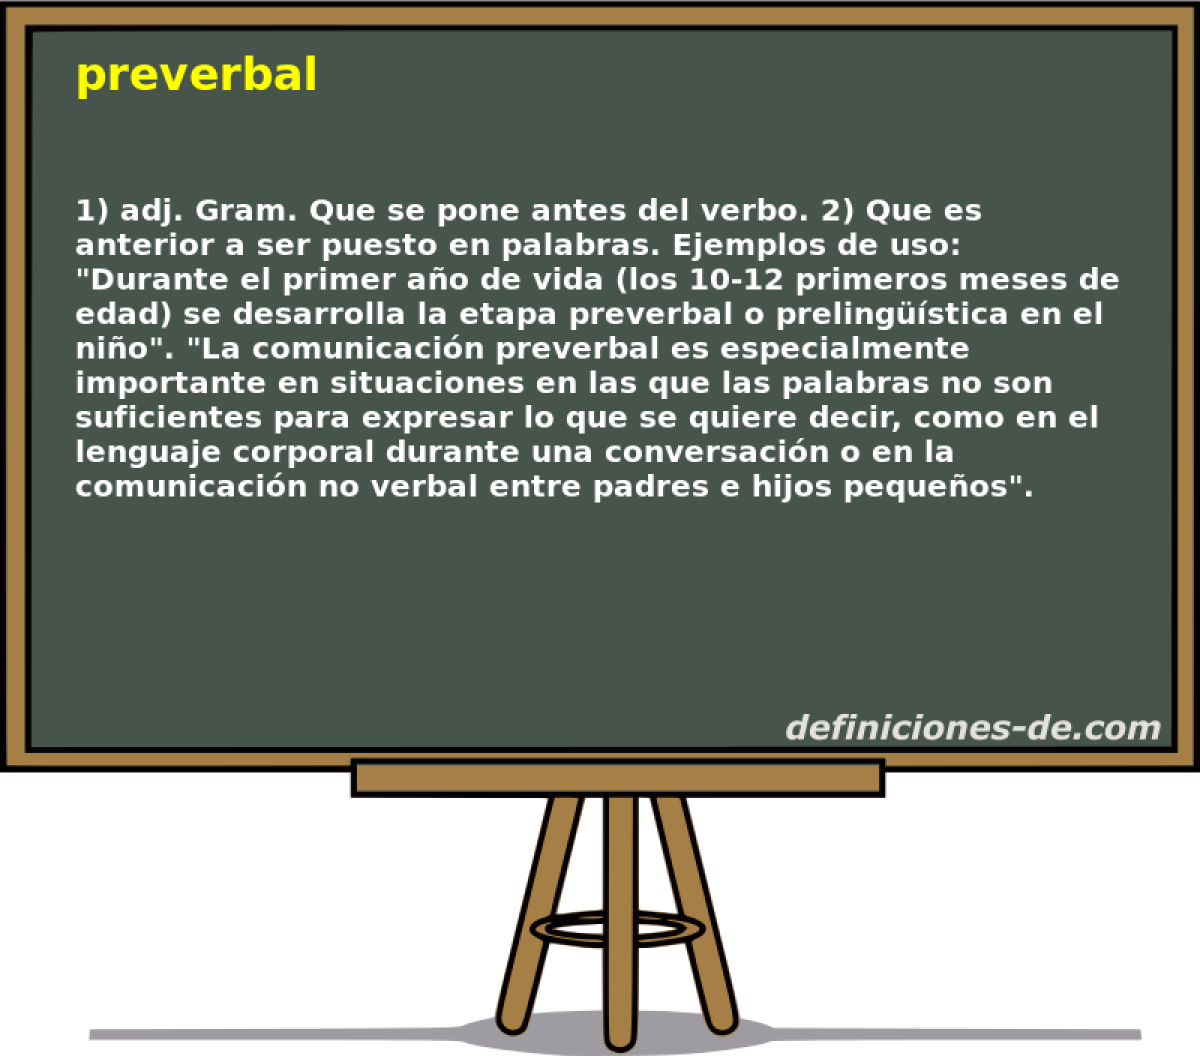 preverbal 